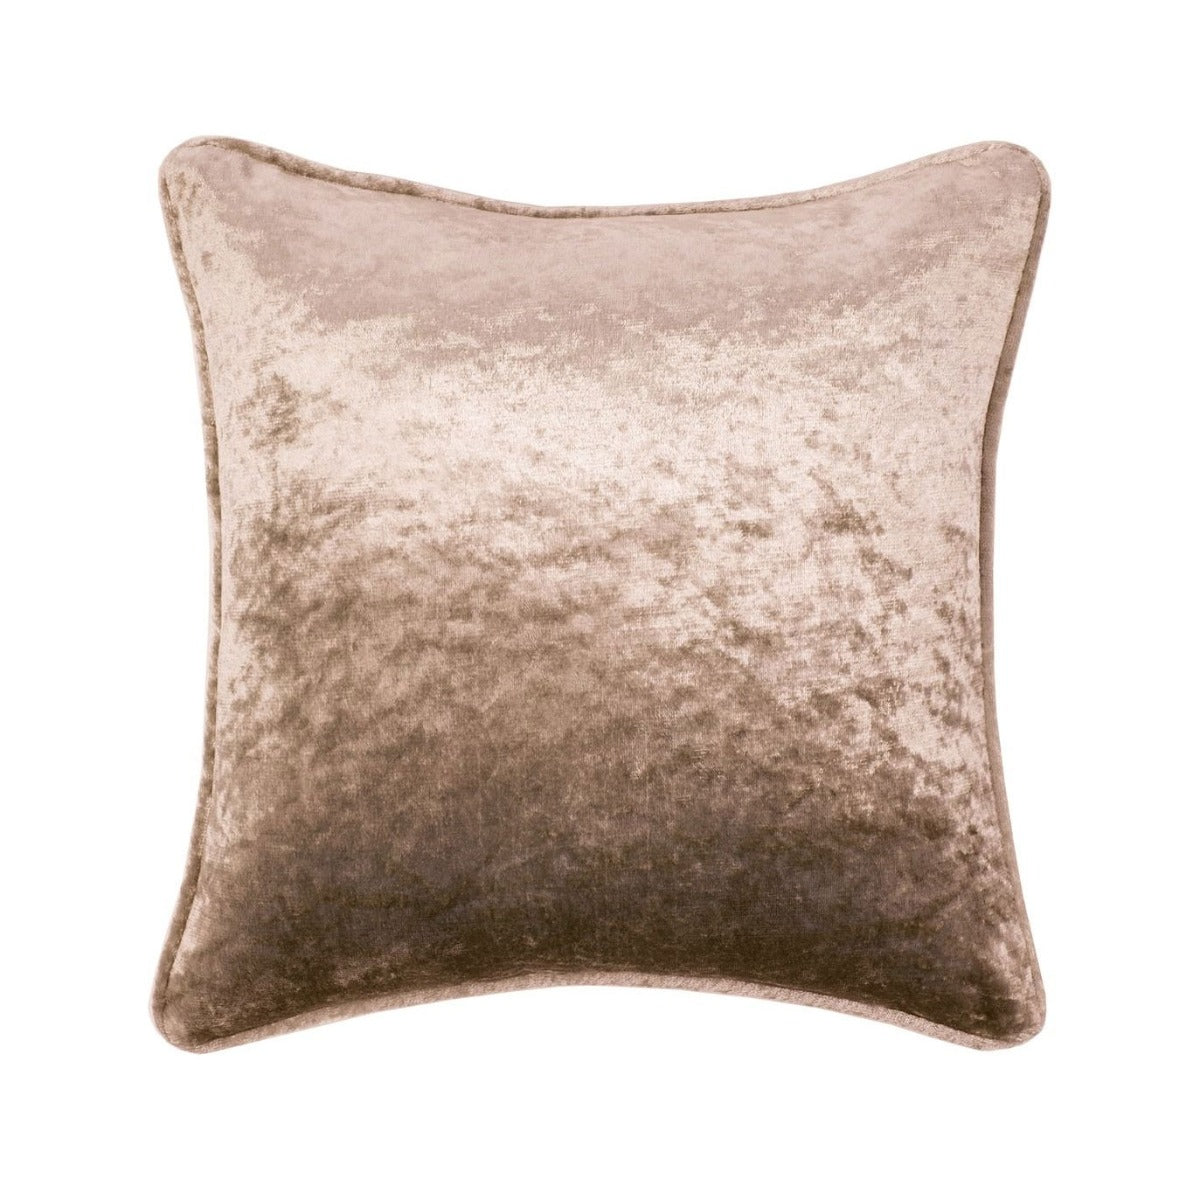 Allure Natural Crushed Velvet Square Cushion (45cm x 45cm)